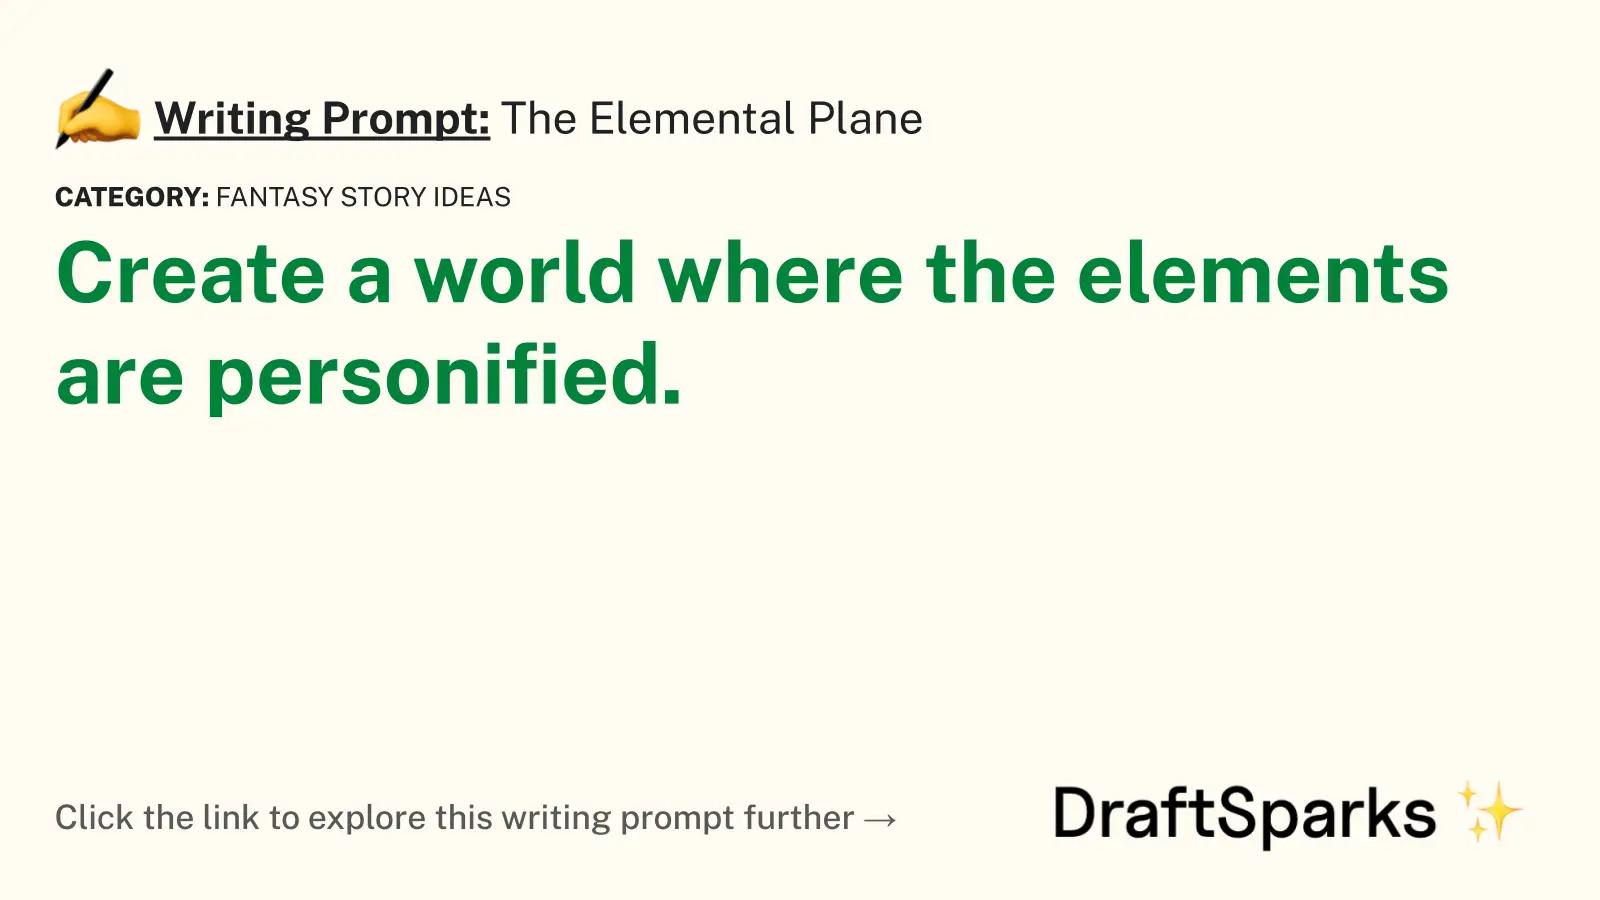 The Elemental Plane